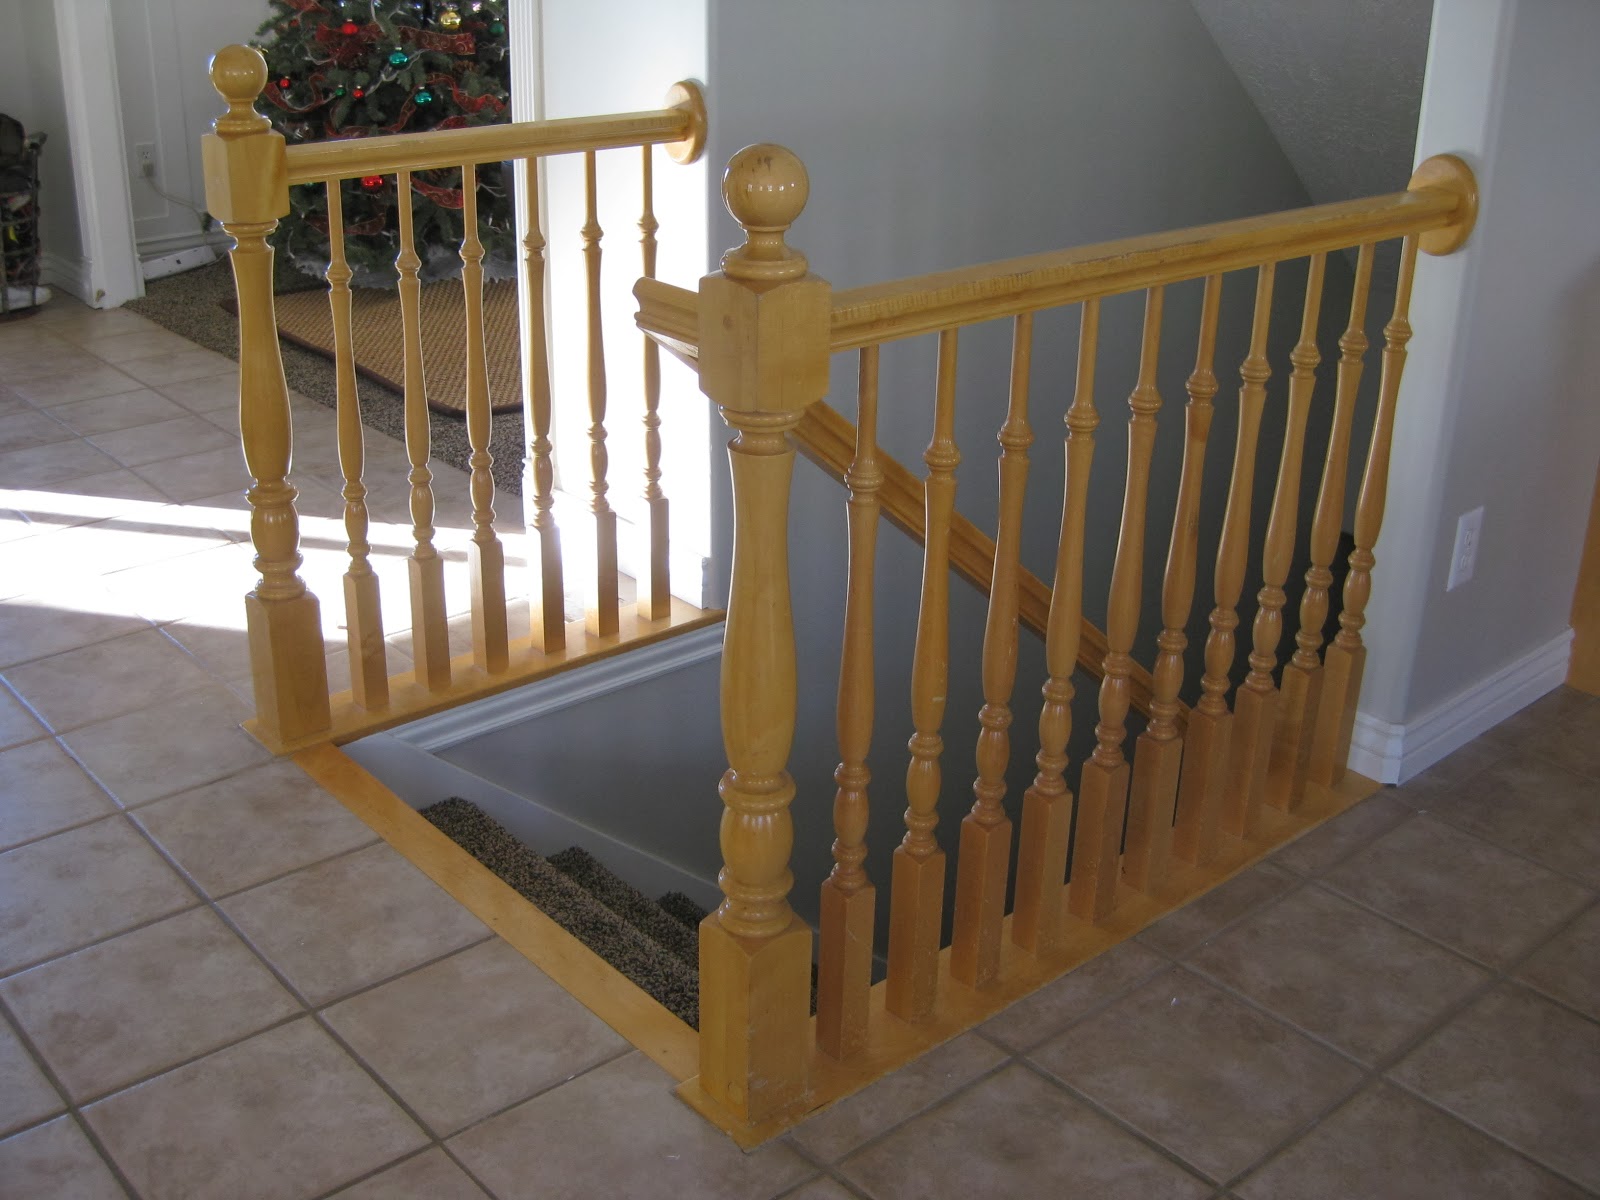 TDA decorating and design: DIY Stair Banister Tutorial ...